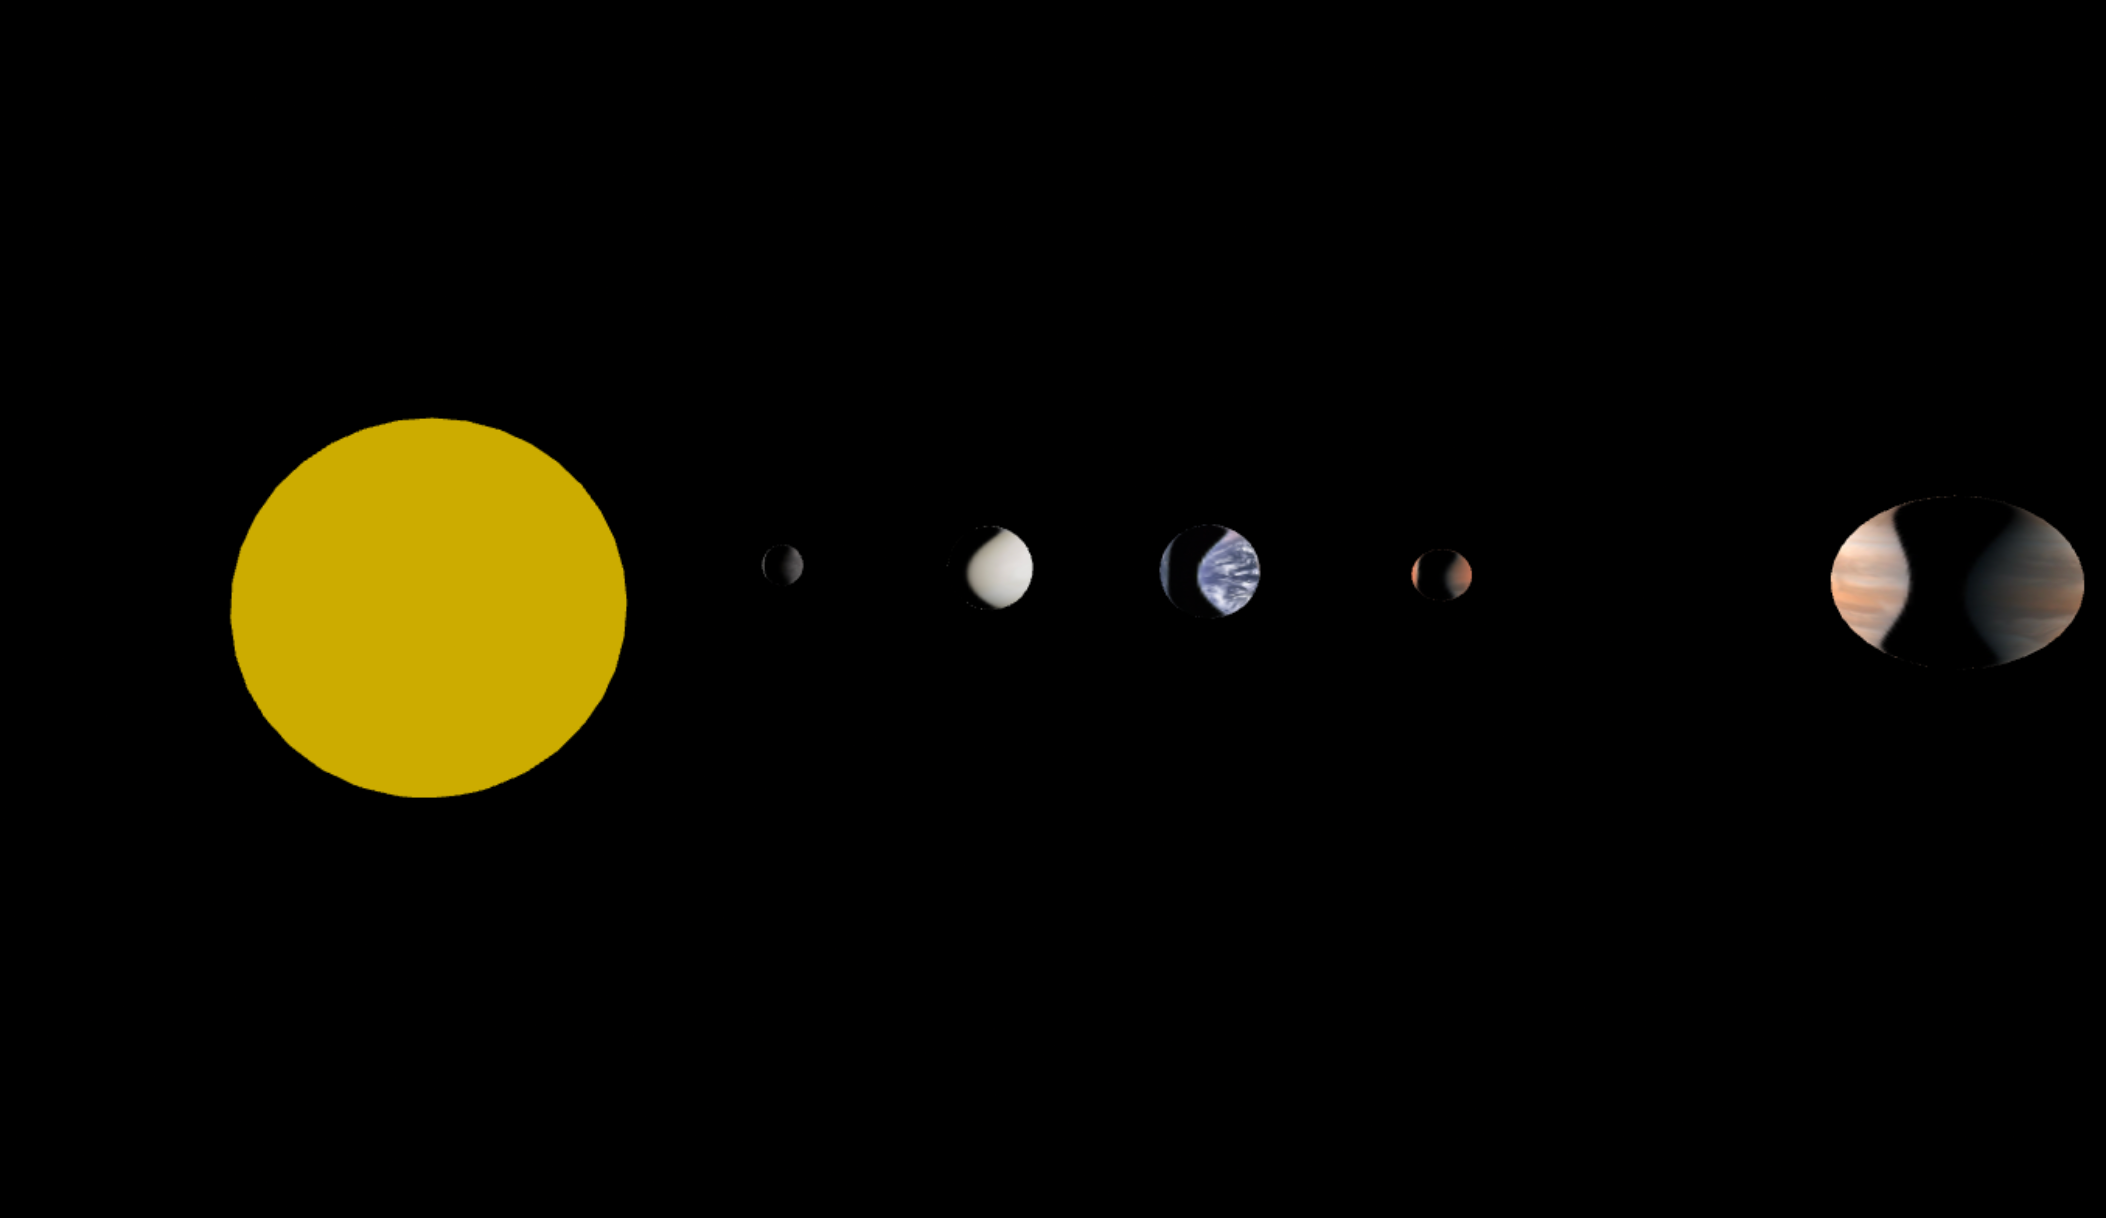 solar system example from adrian de gendt